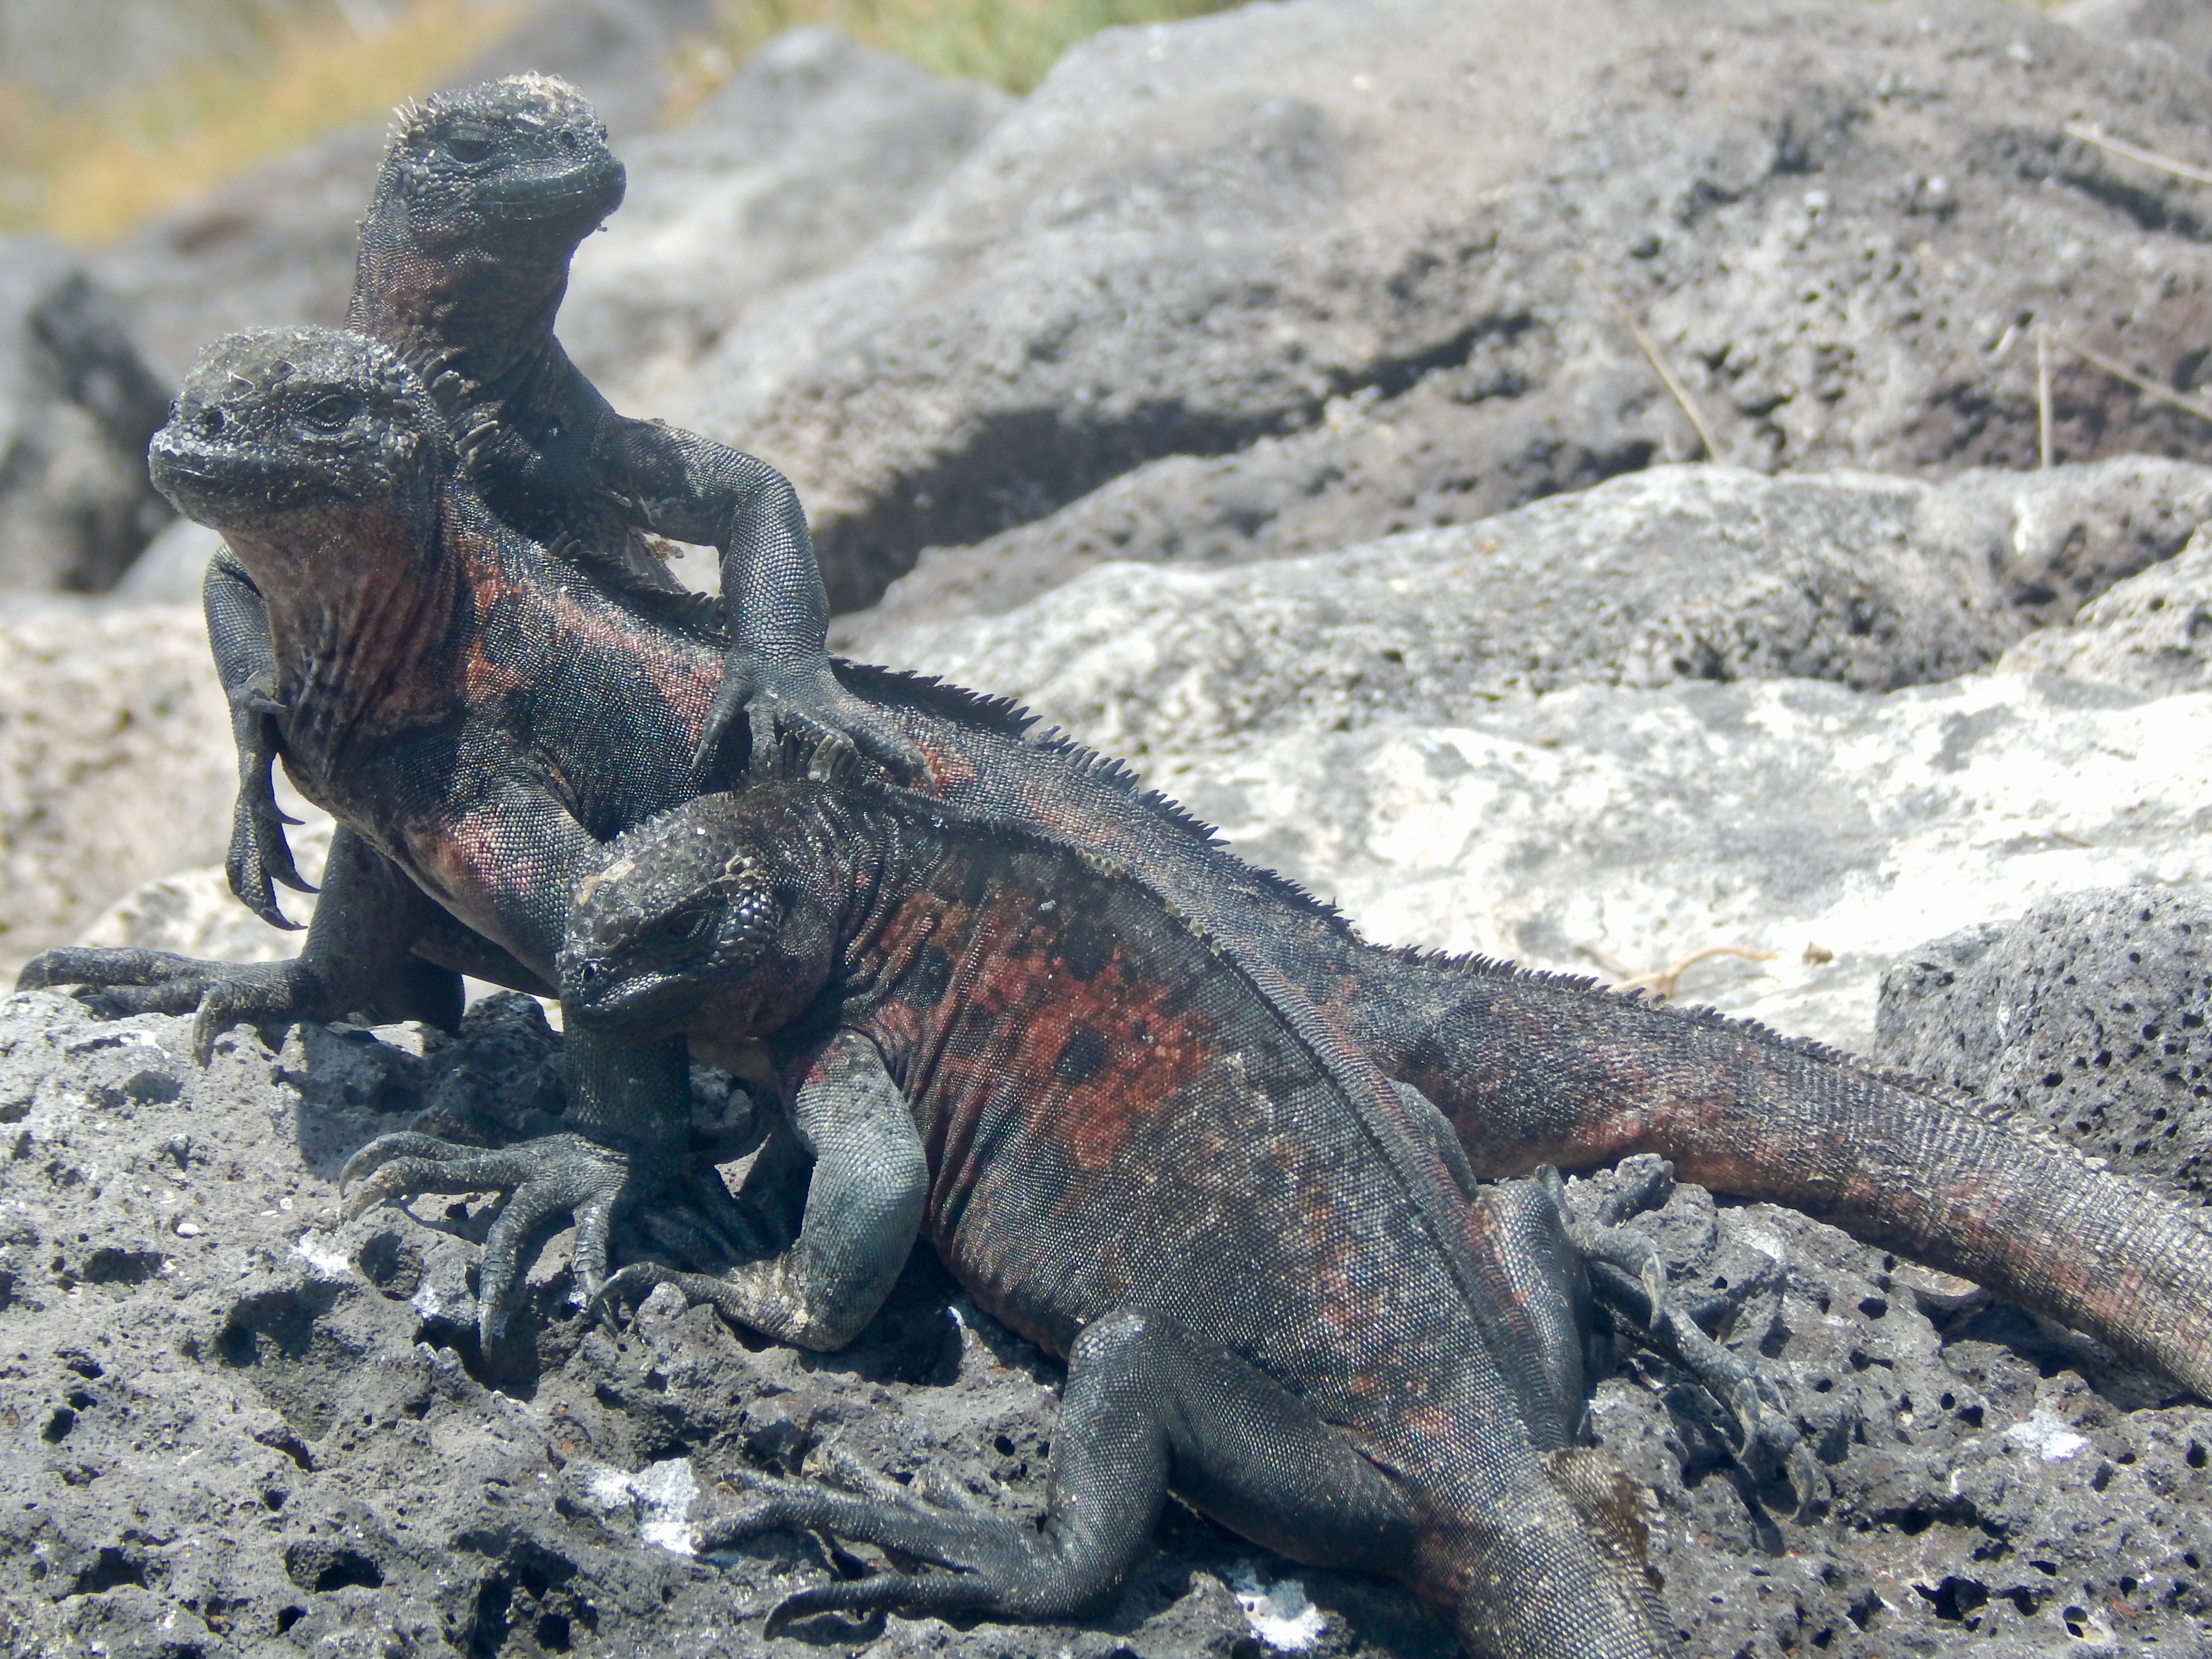 A trio of marine iguanas (Amblyrhynchus cristatus ssp venustissimus) bask together over the volcanic rocks of Isla Española.